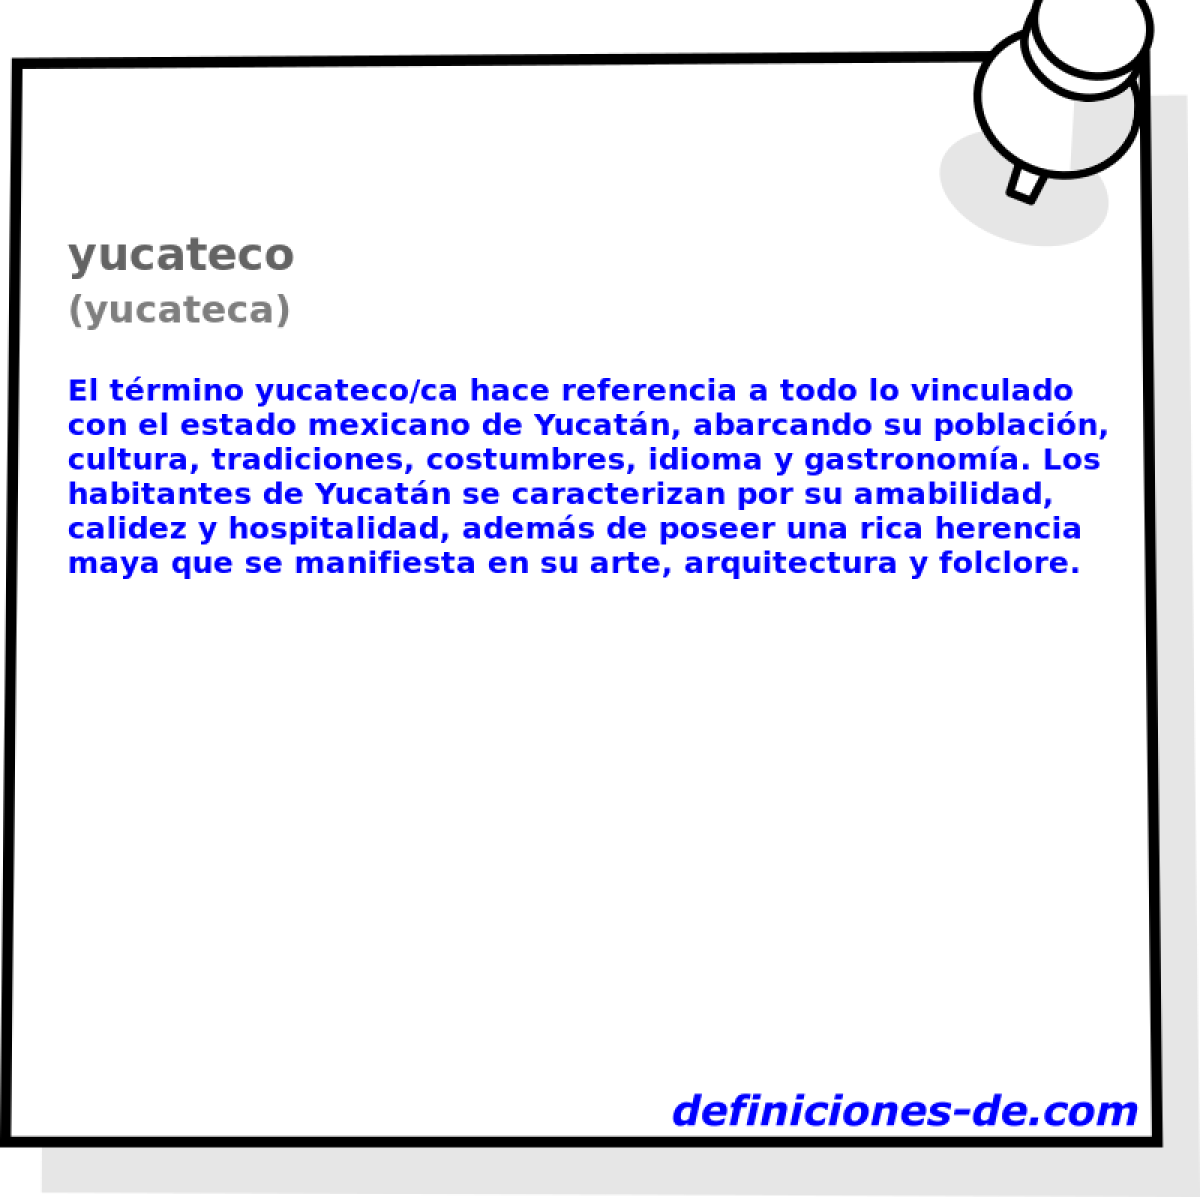 yucateco (yucateca)